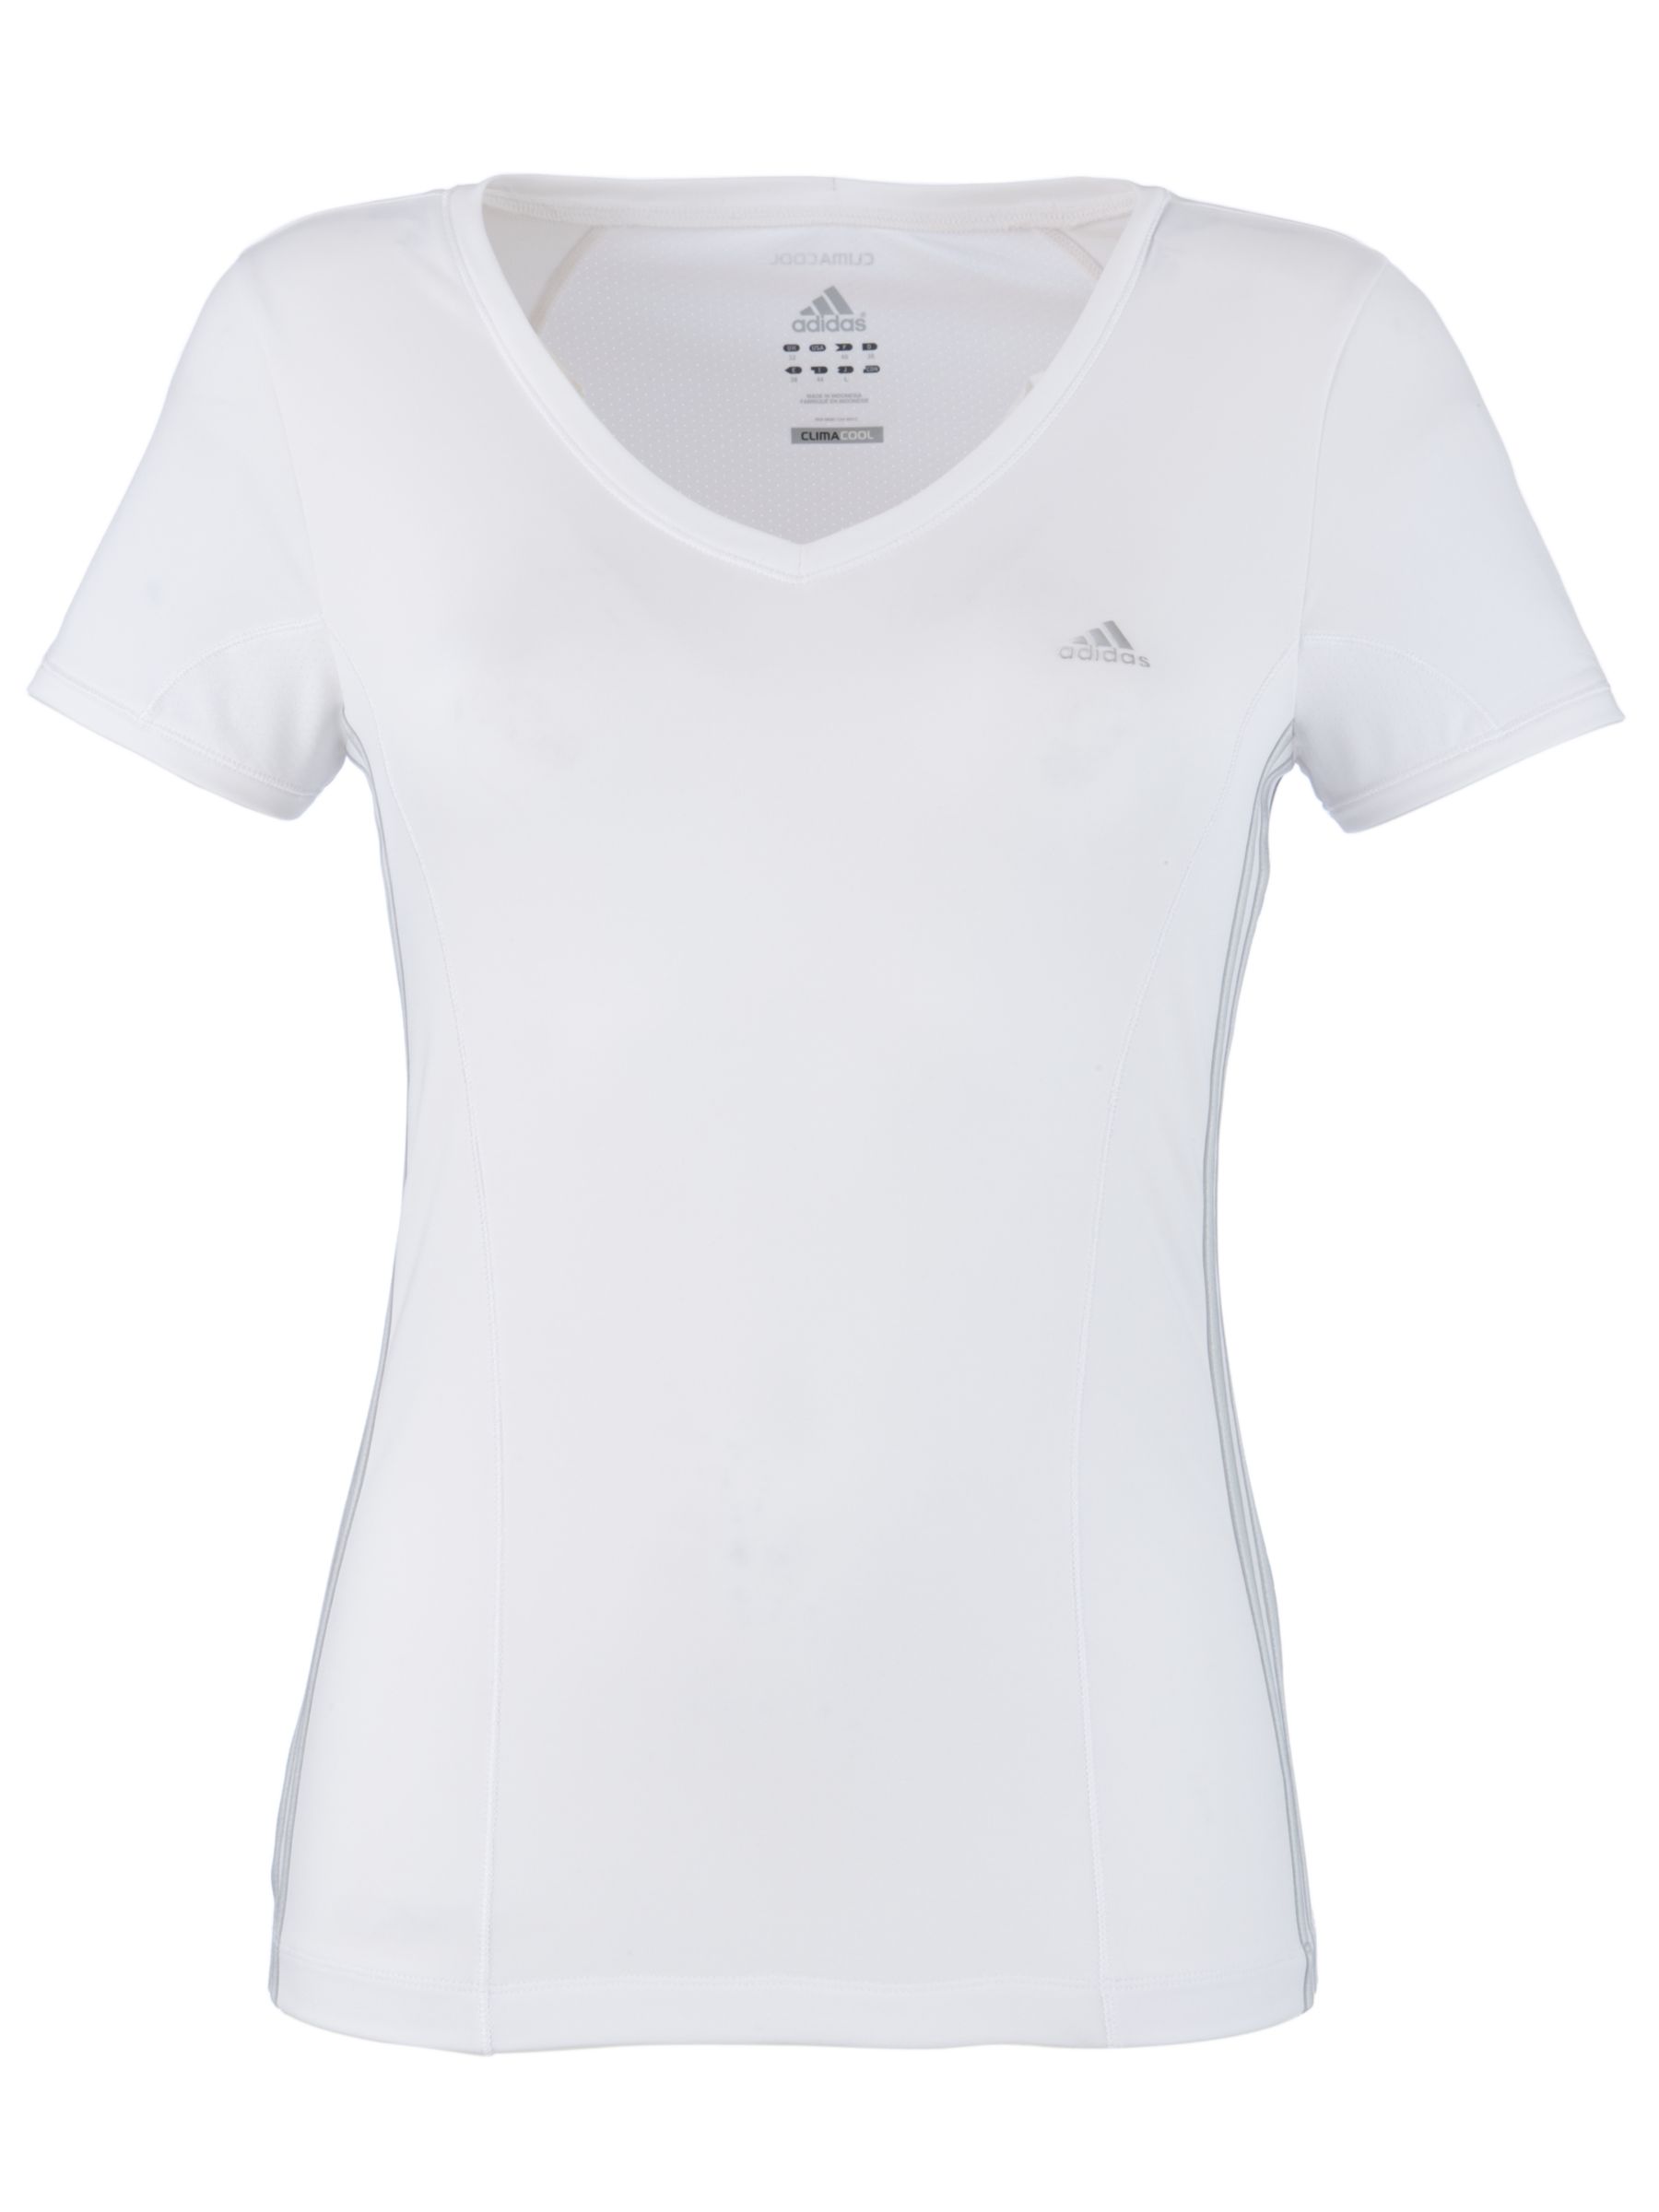 Adidas Clima 365 Core T-Shirt, White/silver